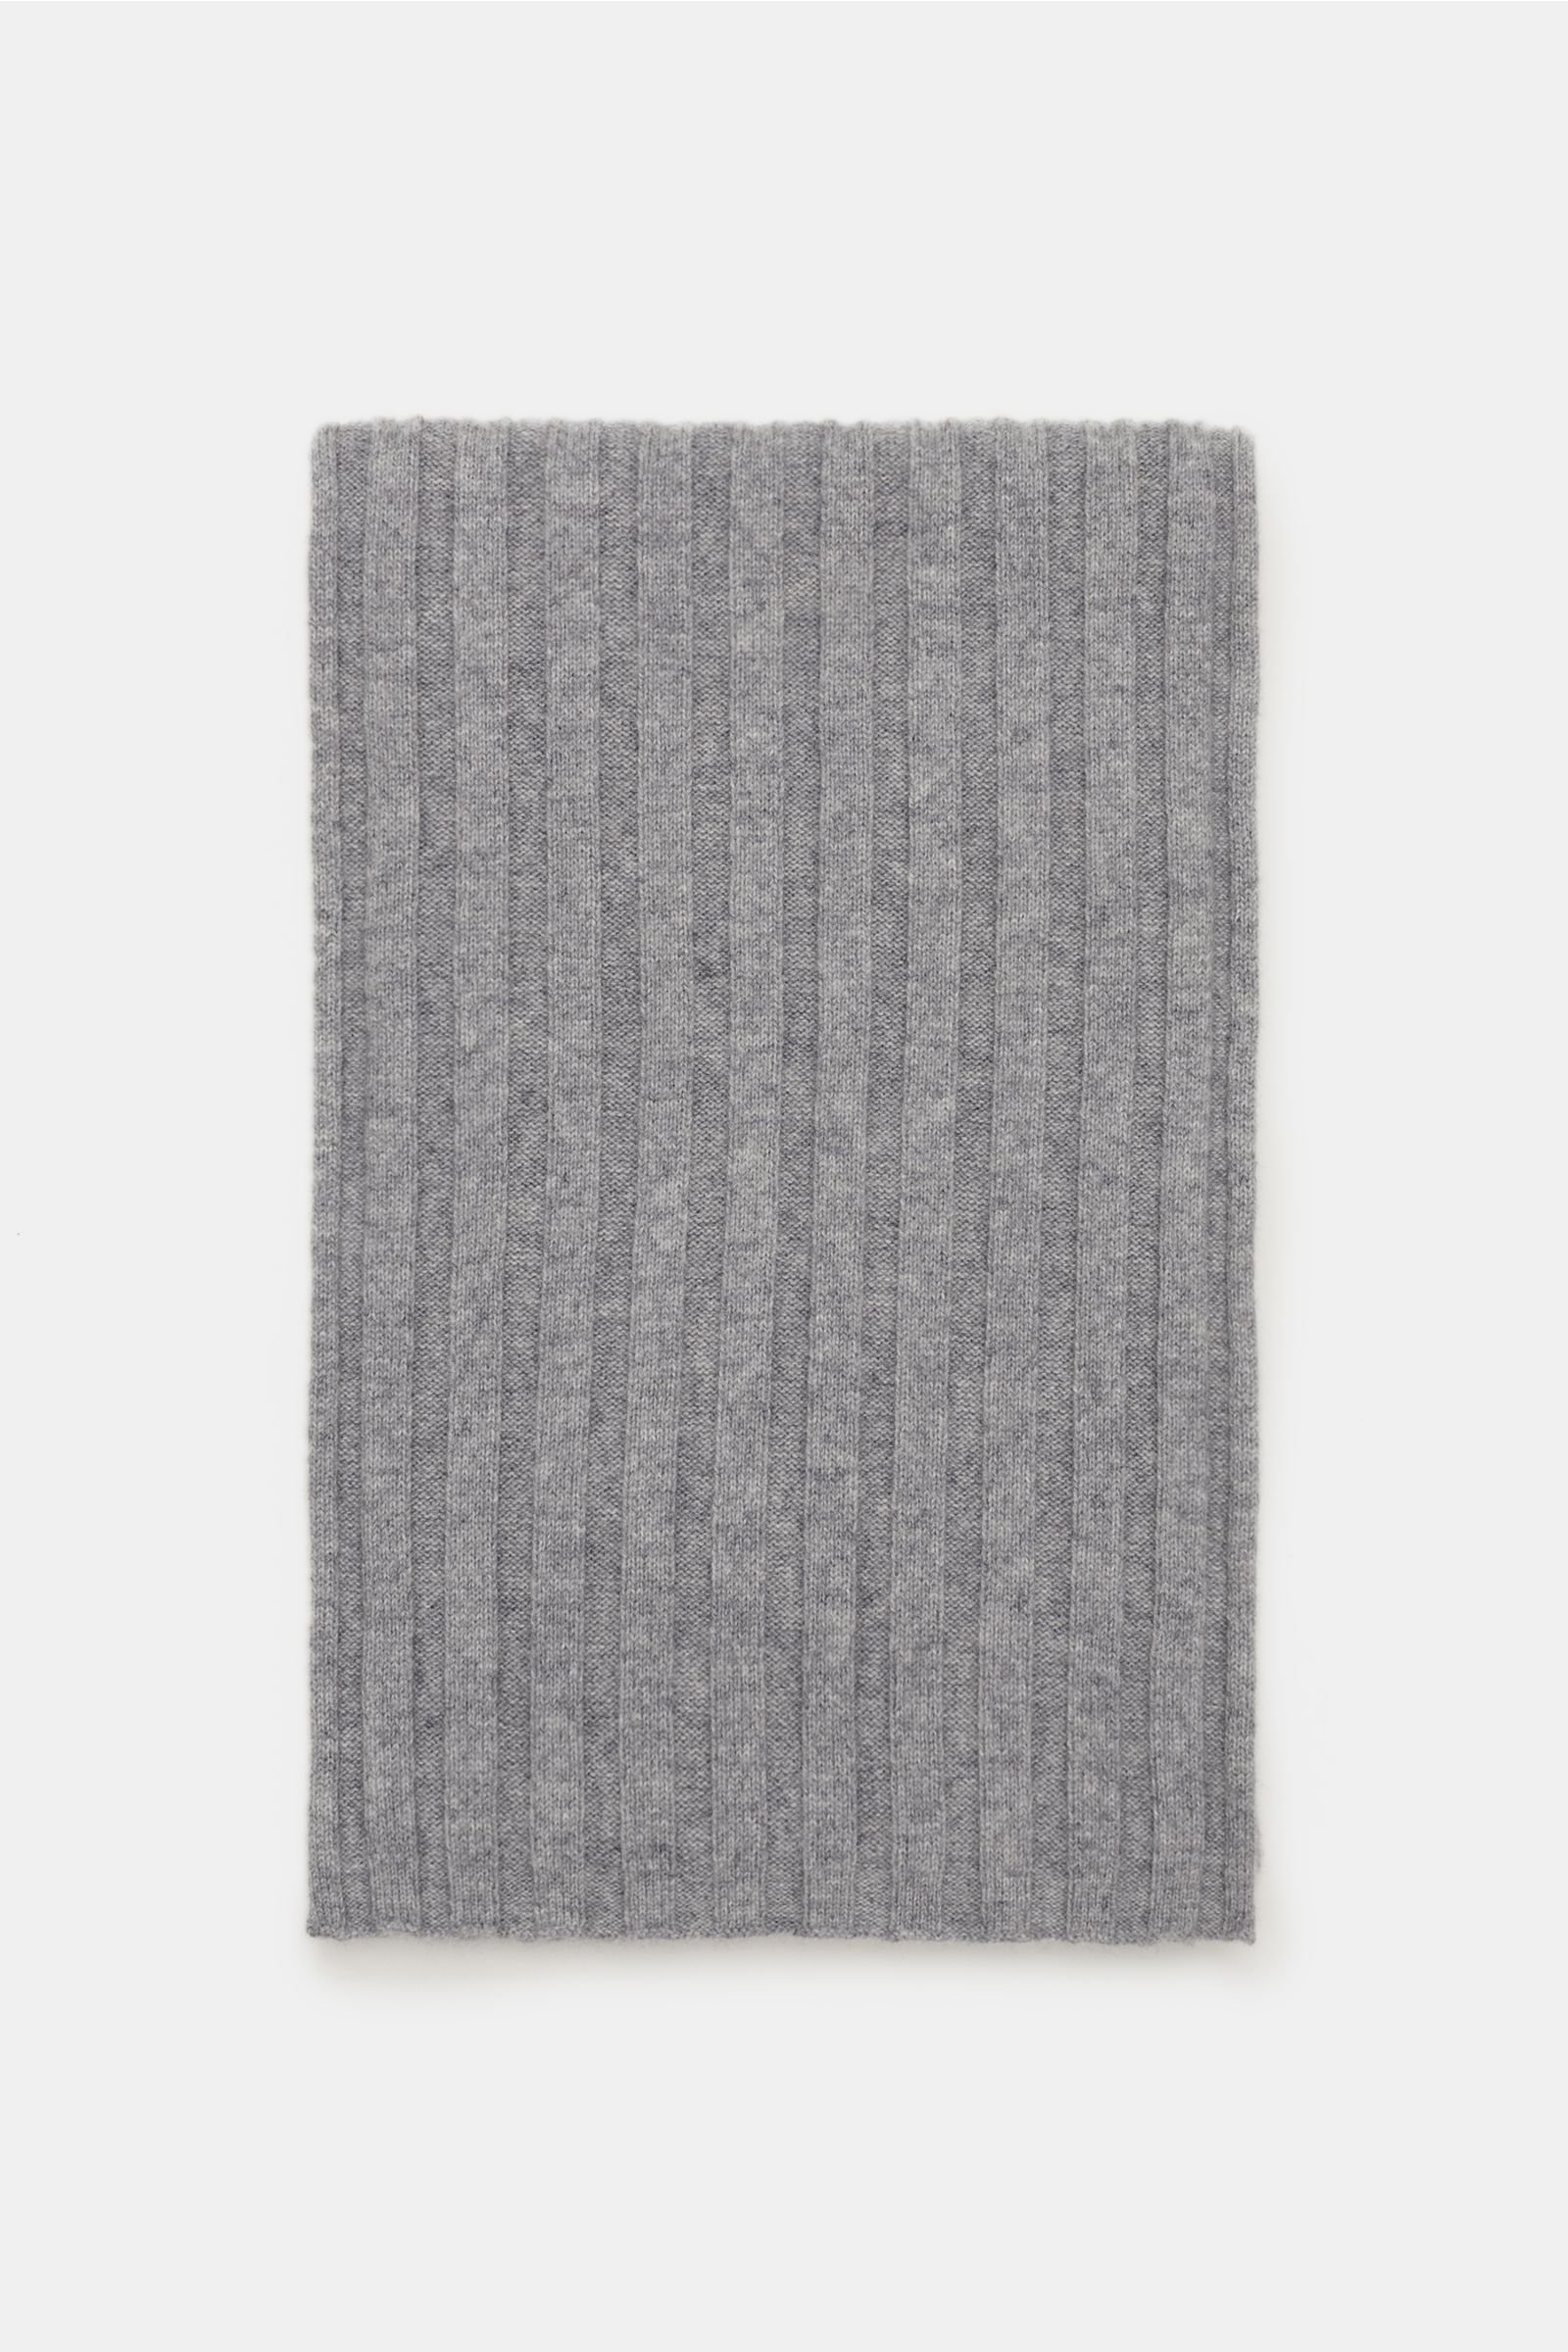 Cashmere scarf grey